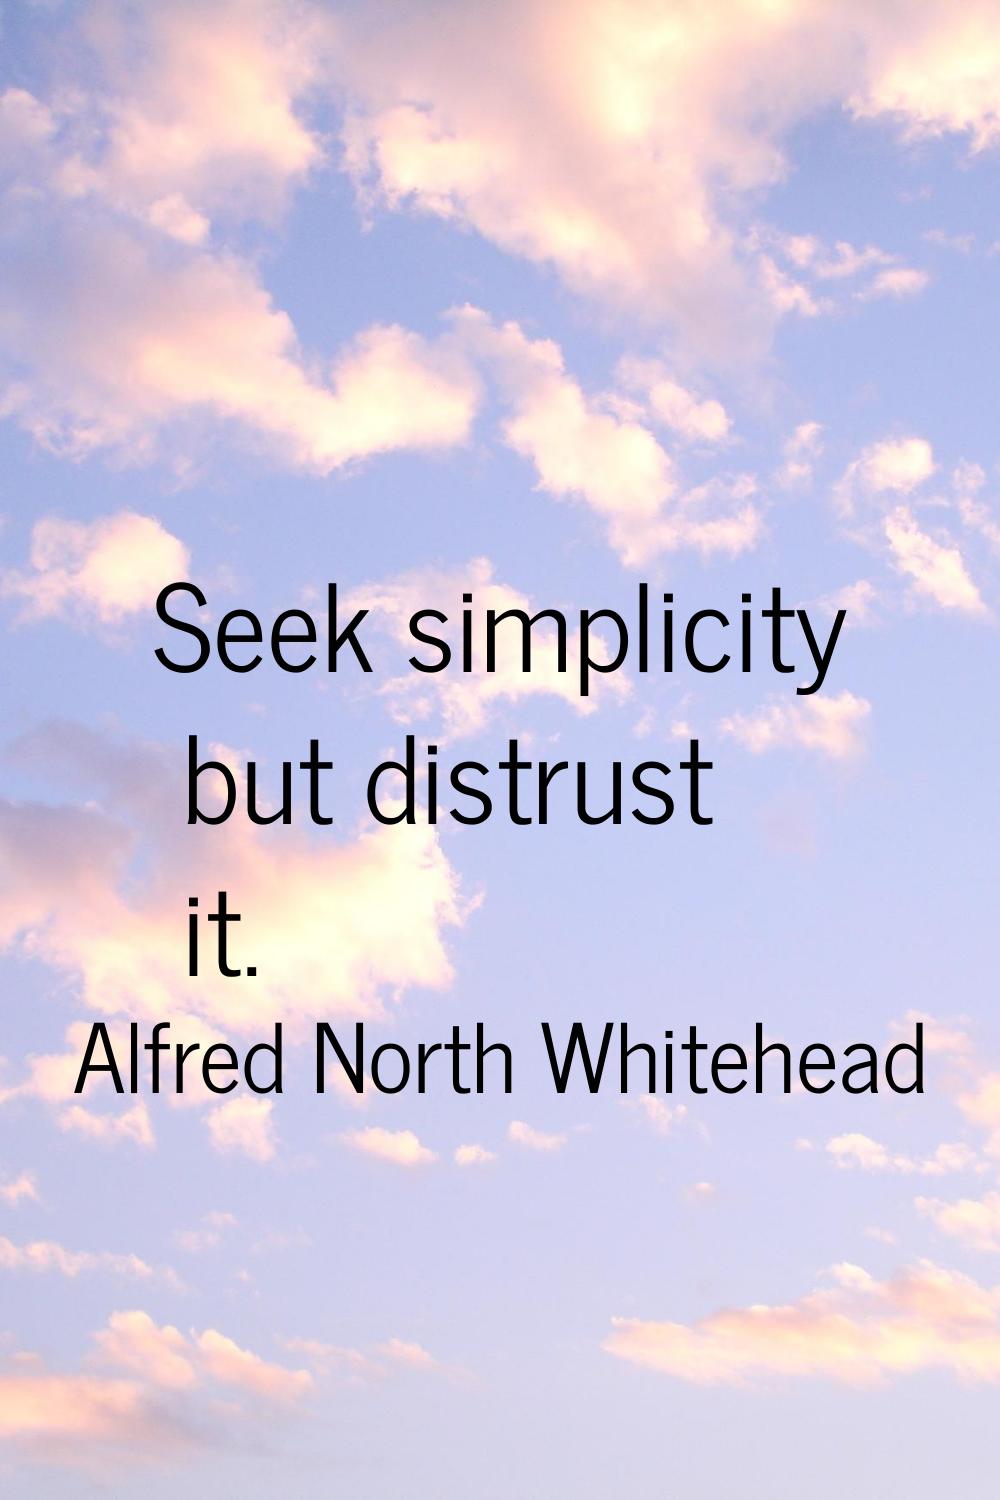 Seek simplicity but distrust it.